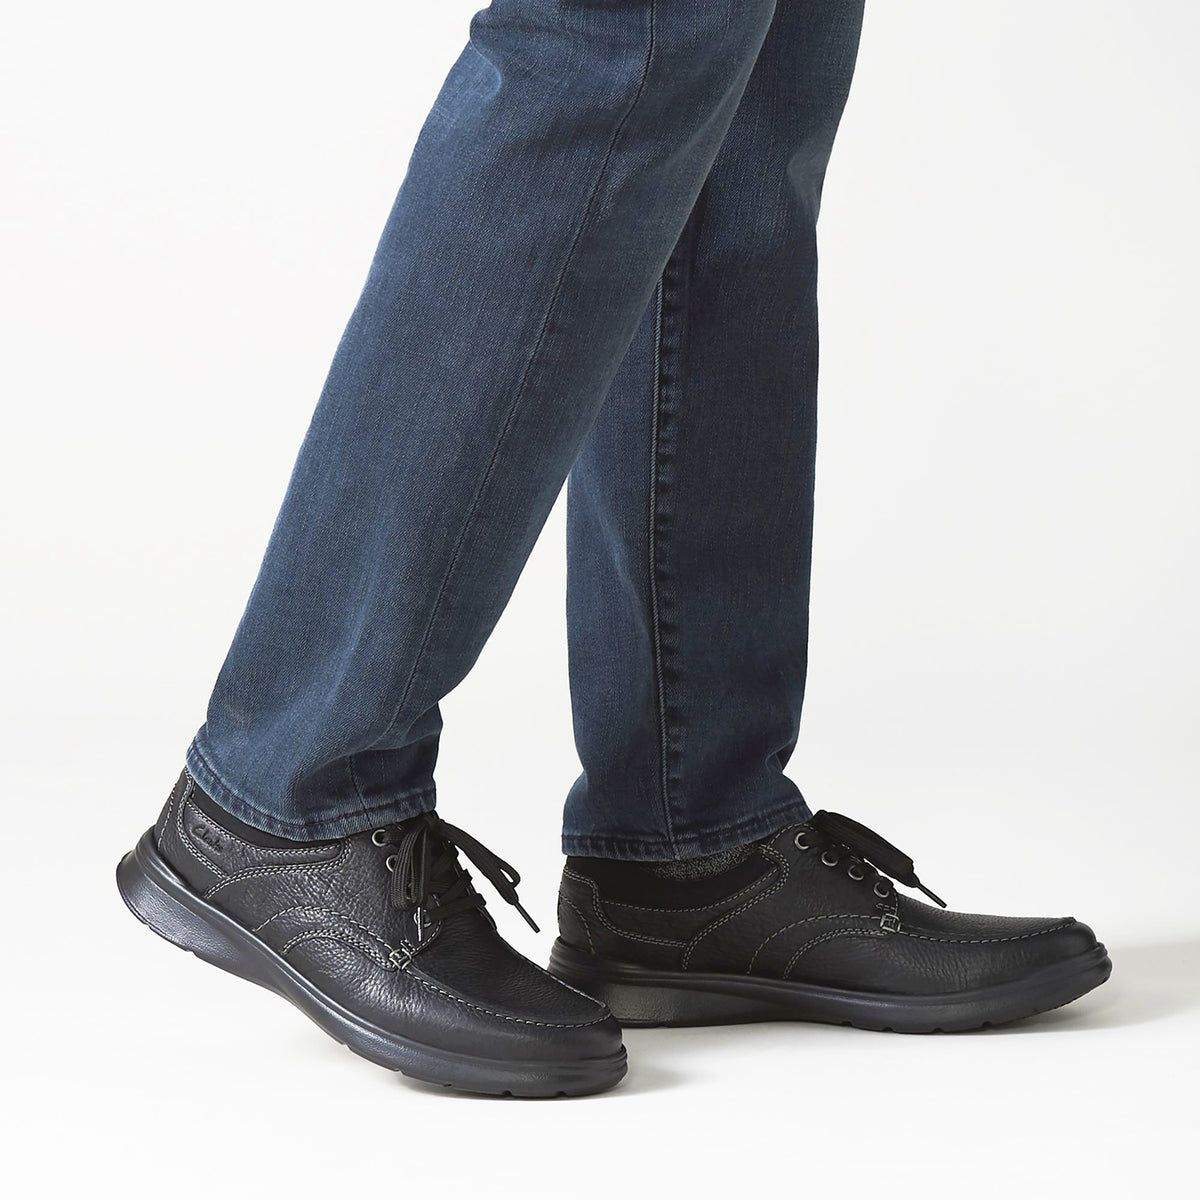 Clarks Cotrell Edge Black | Men's Walking Shoes | Footwear etc.